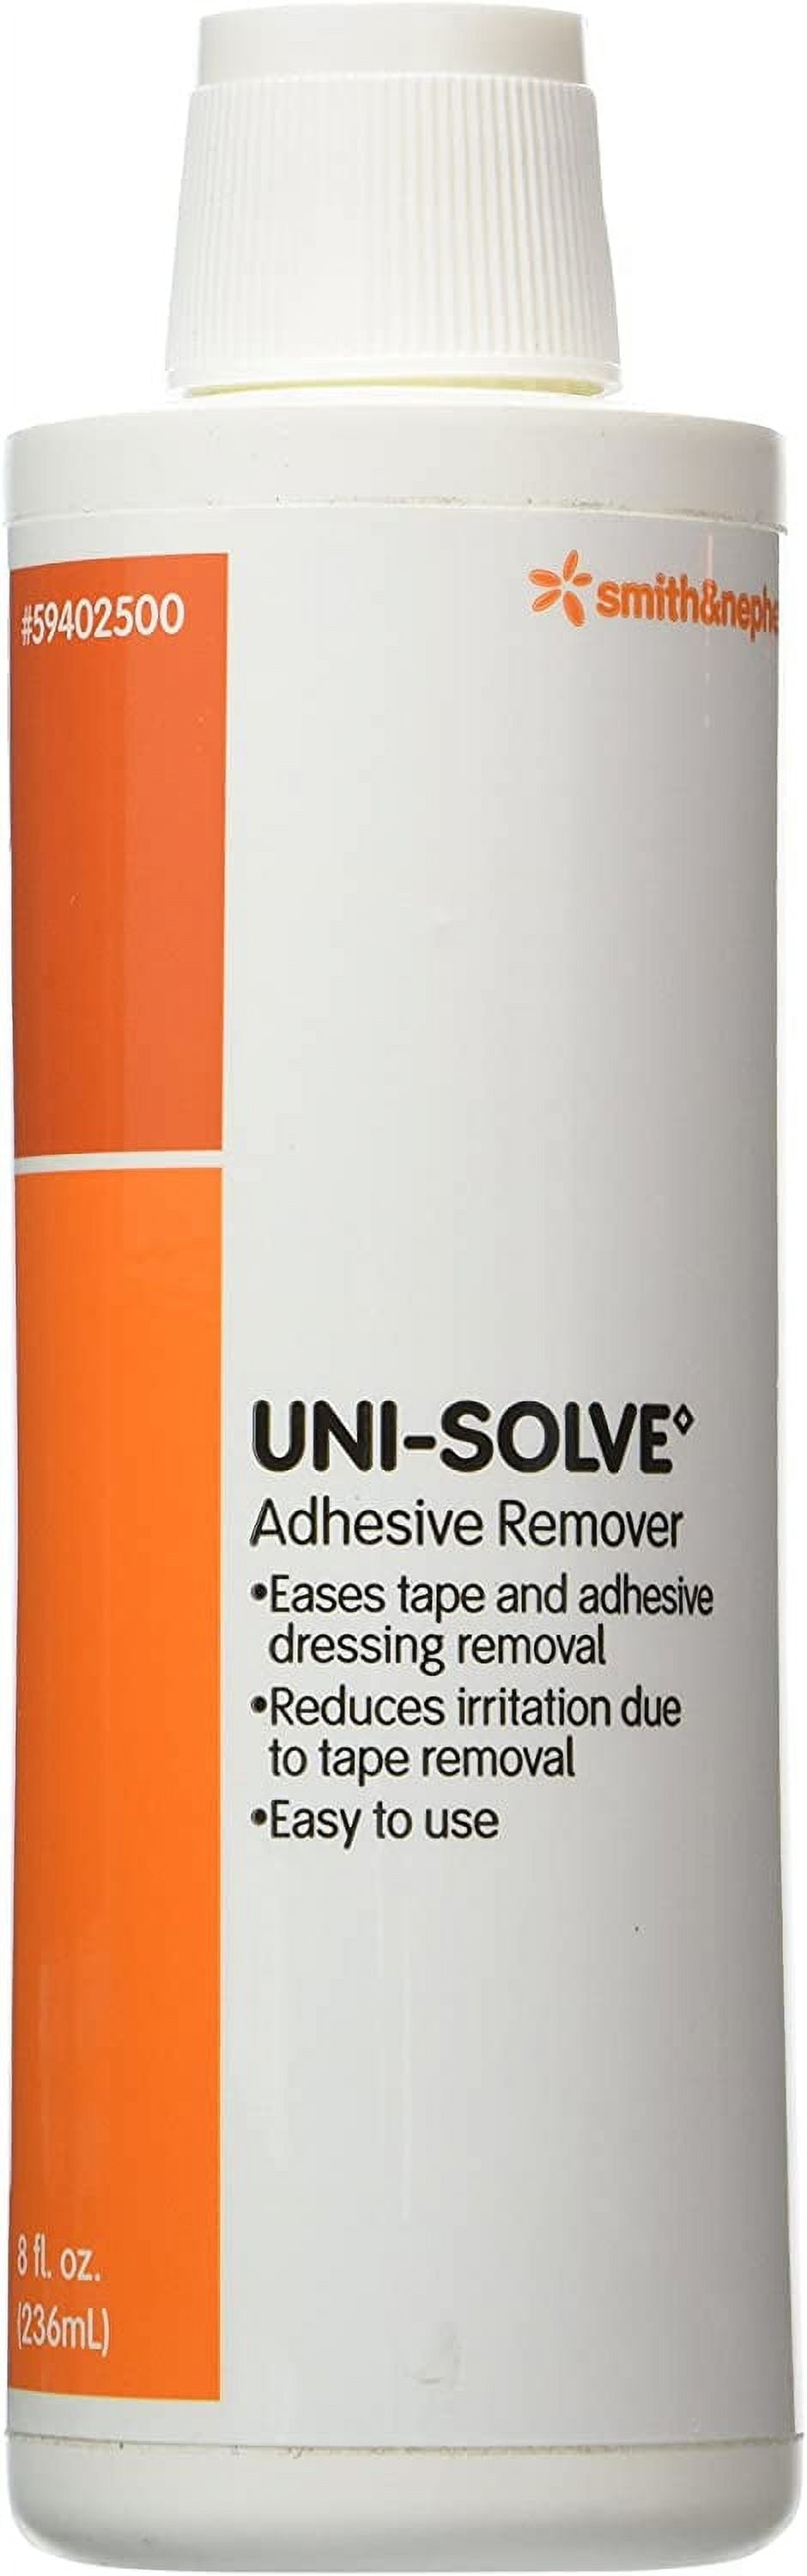 UNI-SOLVE Adhesive Remover 8 oz Bottle